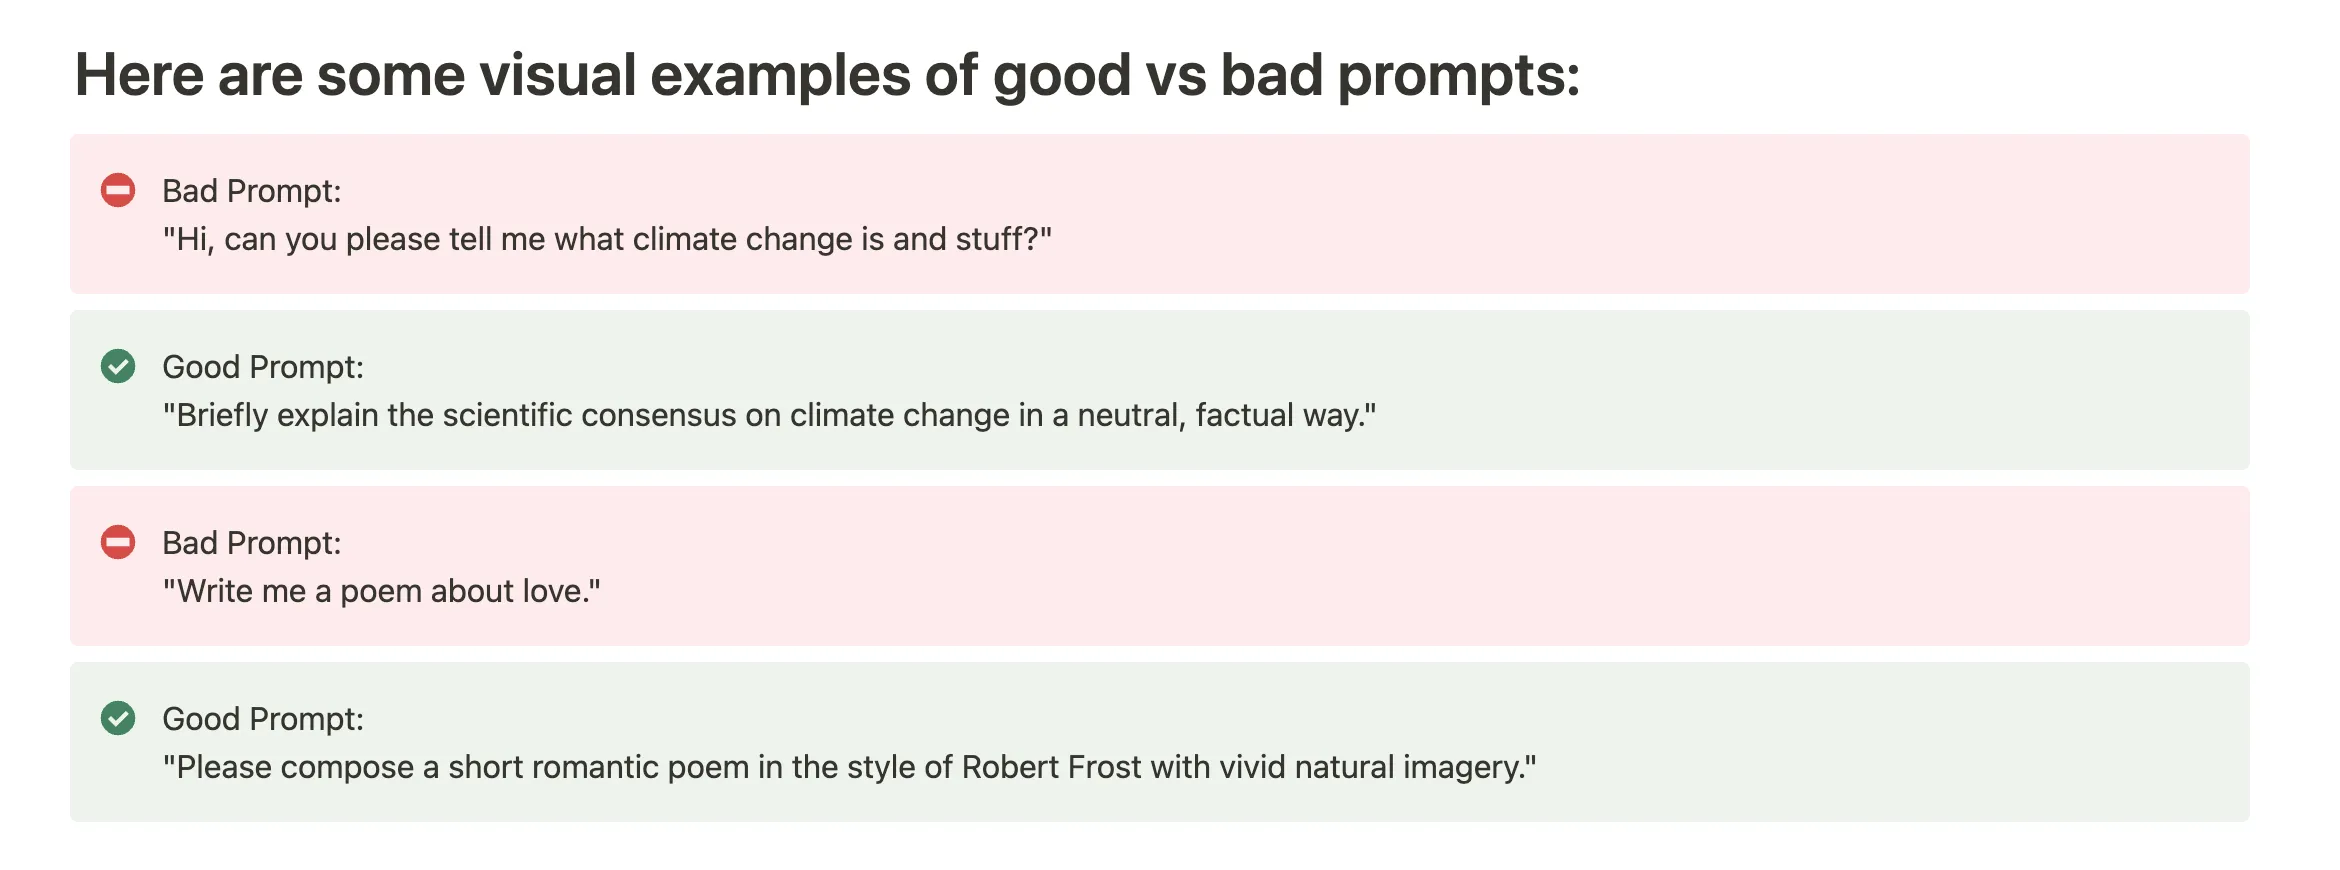 visual-prompts-good-vs-bad